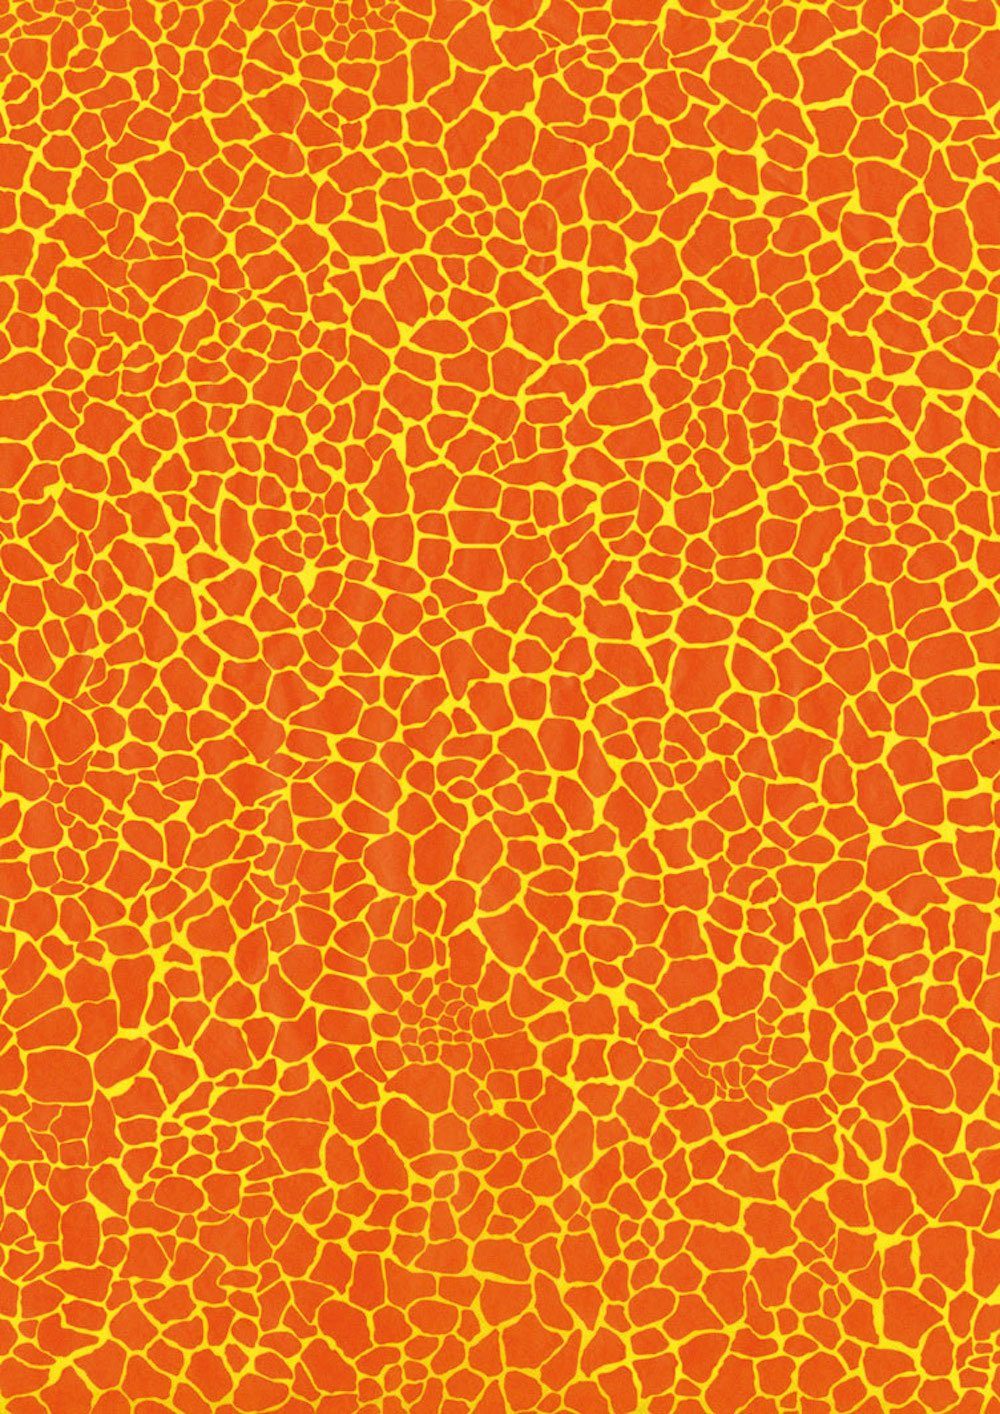 H-Erzmade Zeichenpapier Décopatch-Papier 532 Mosaik orange/gelb, 30 x 40